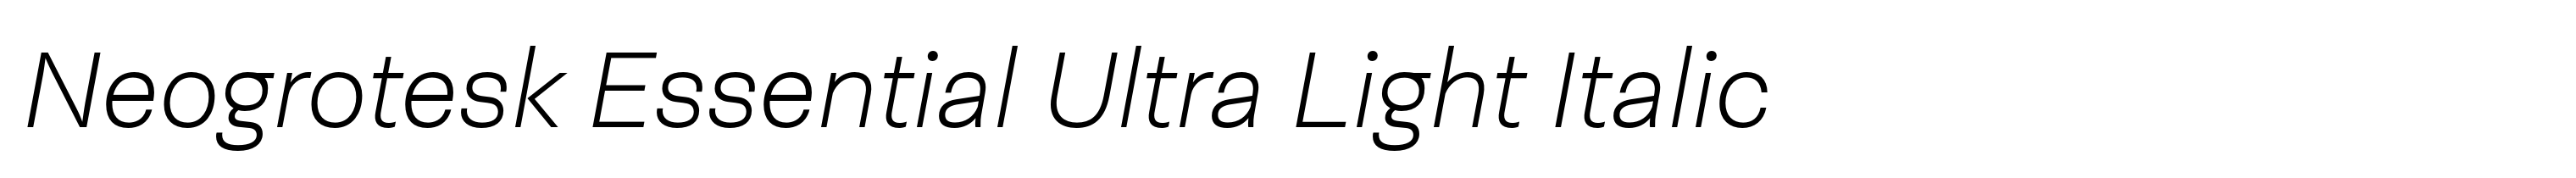 Neogrotesk Essential Ultra Light Italic